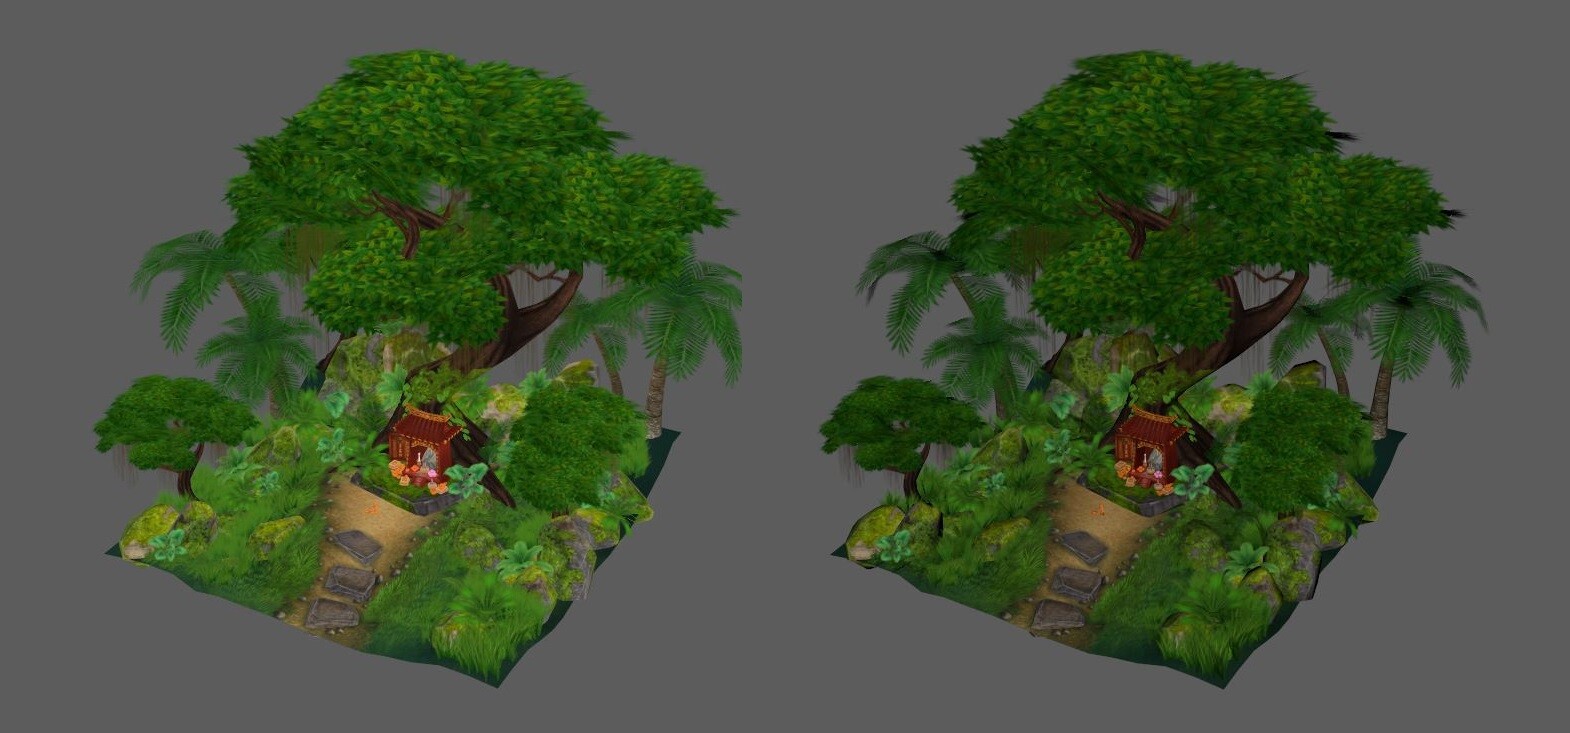 New scene in Maya flat lighting (left) and Maya default lighting (right)